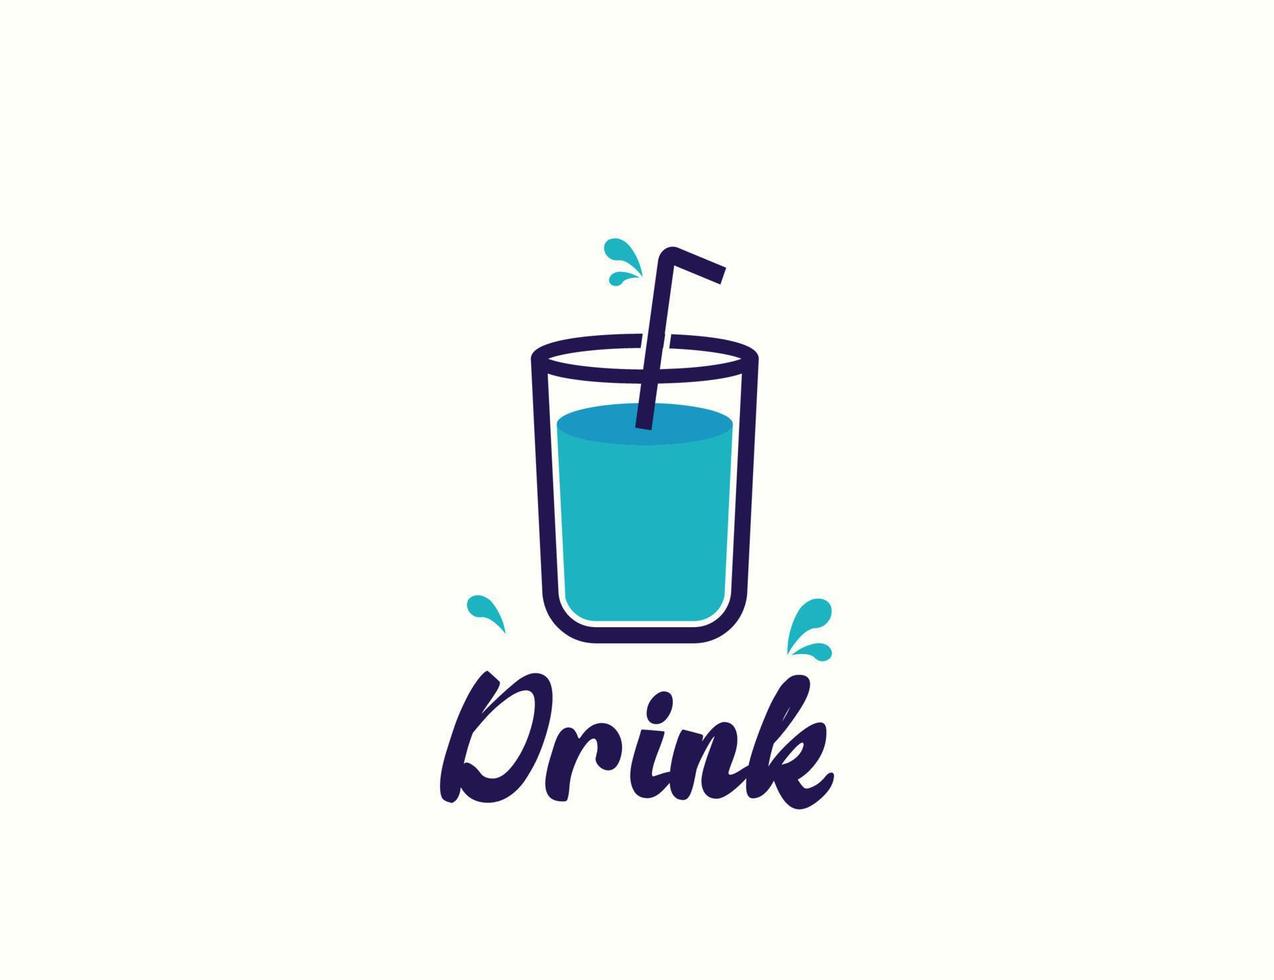 drinkbeker frisdrank logo ontwerp vector